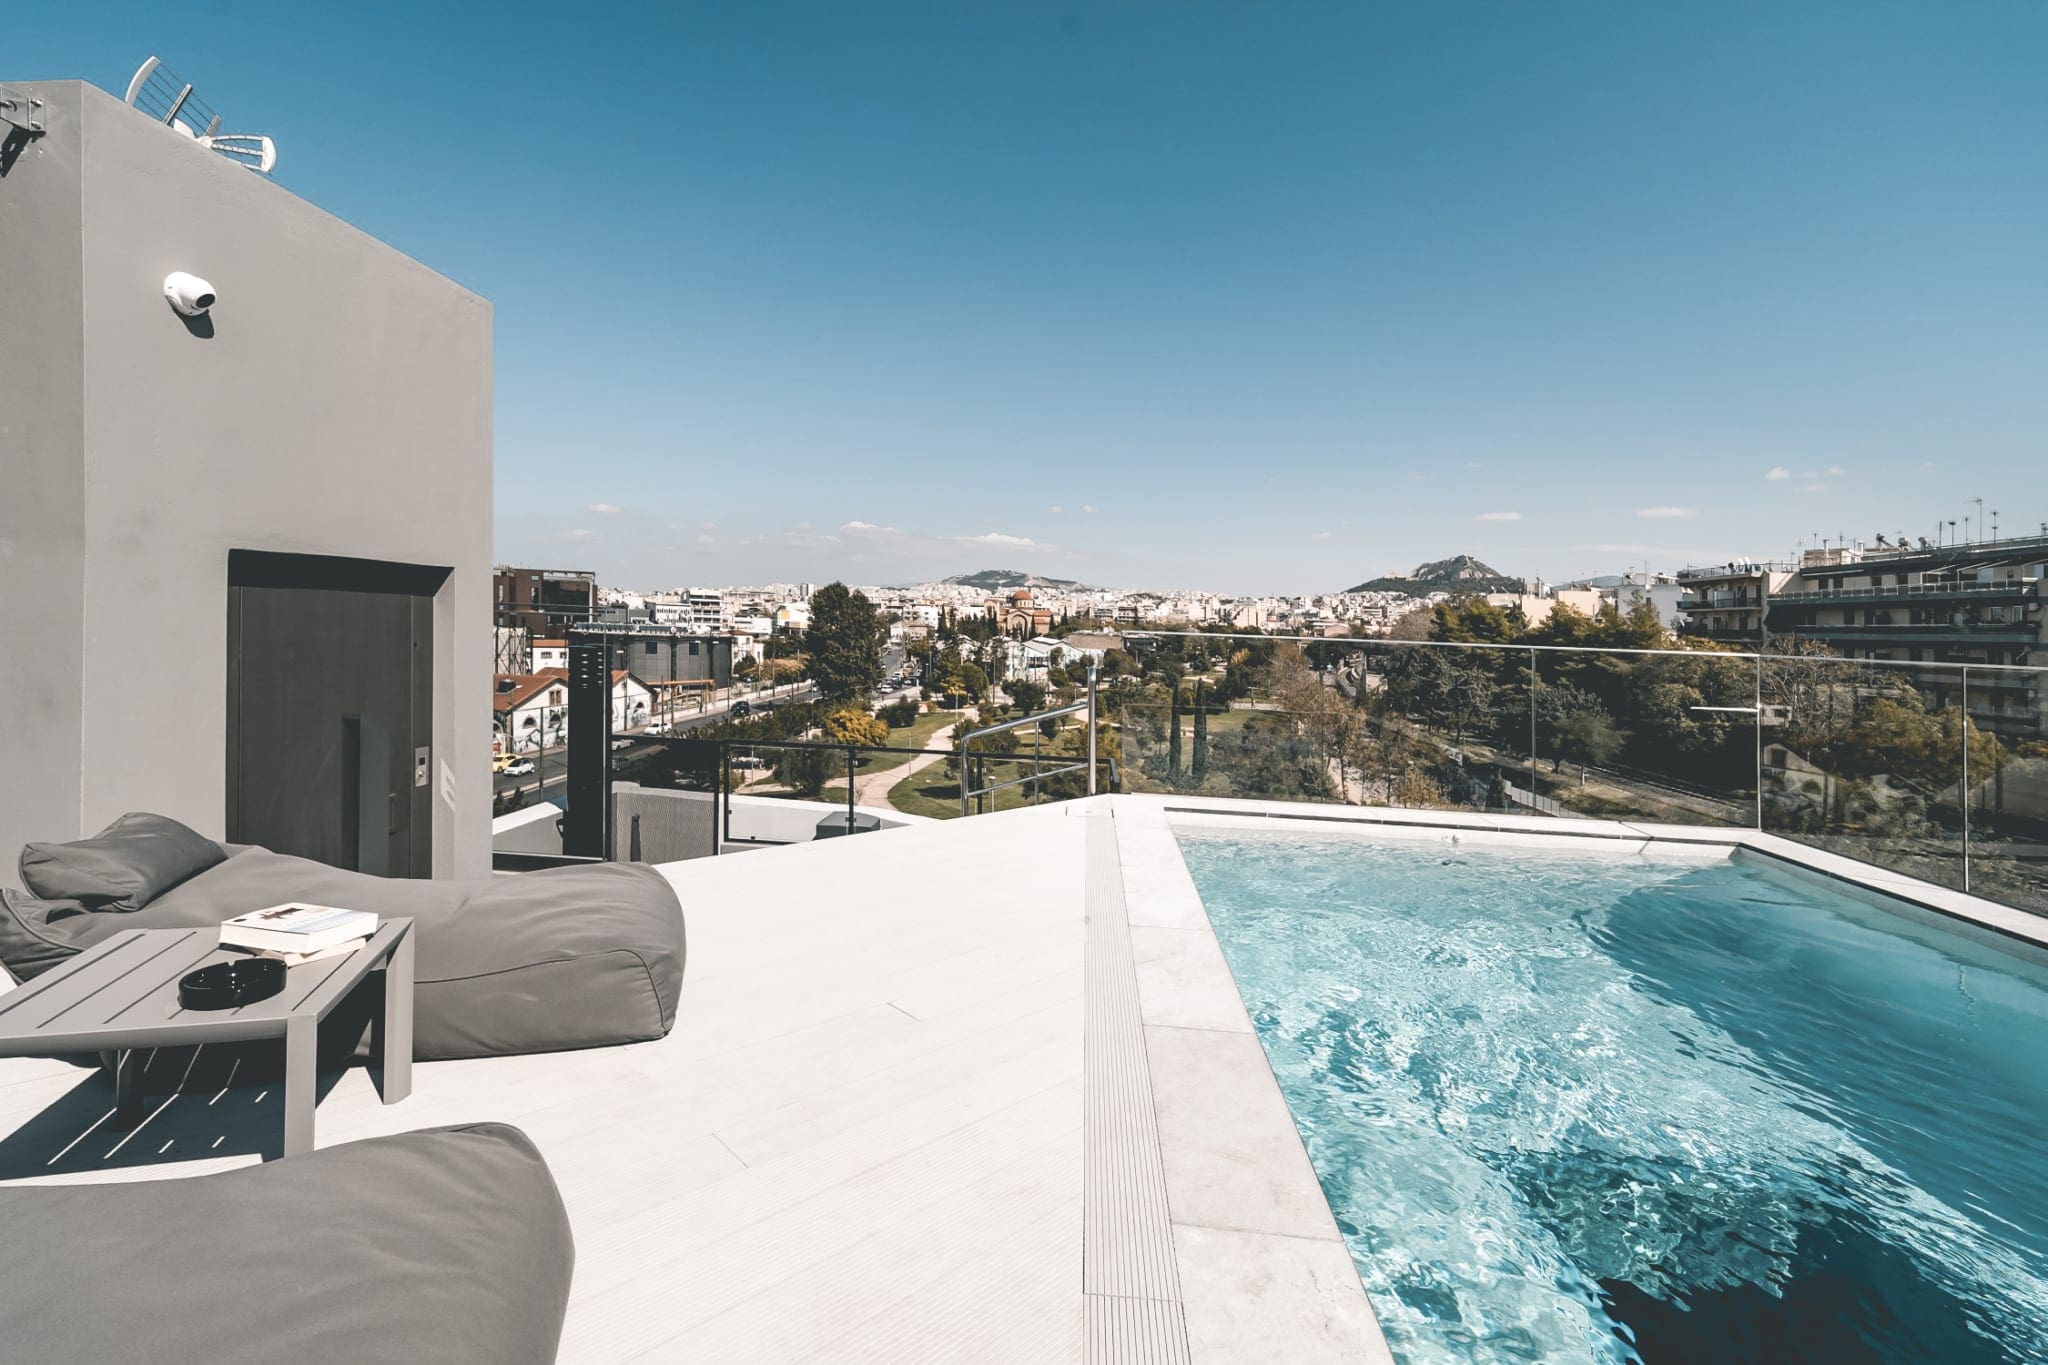 Airbnb met zwembad, Airbnb Finds: slapen in Athene met rooftop pool